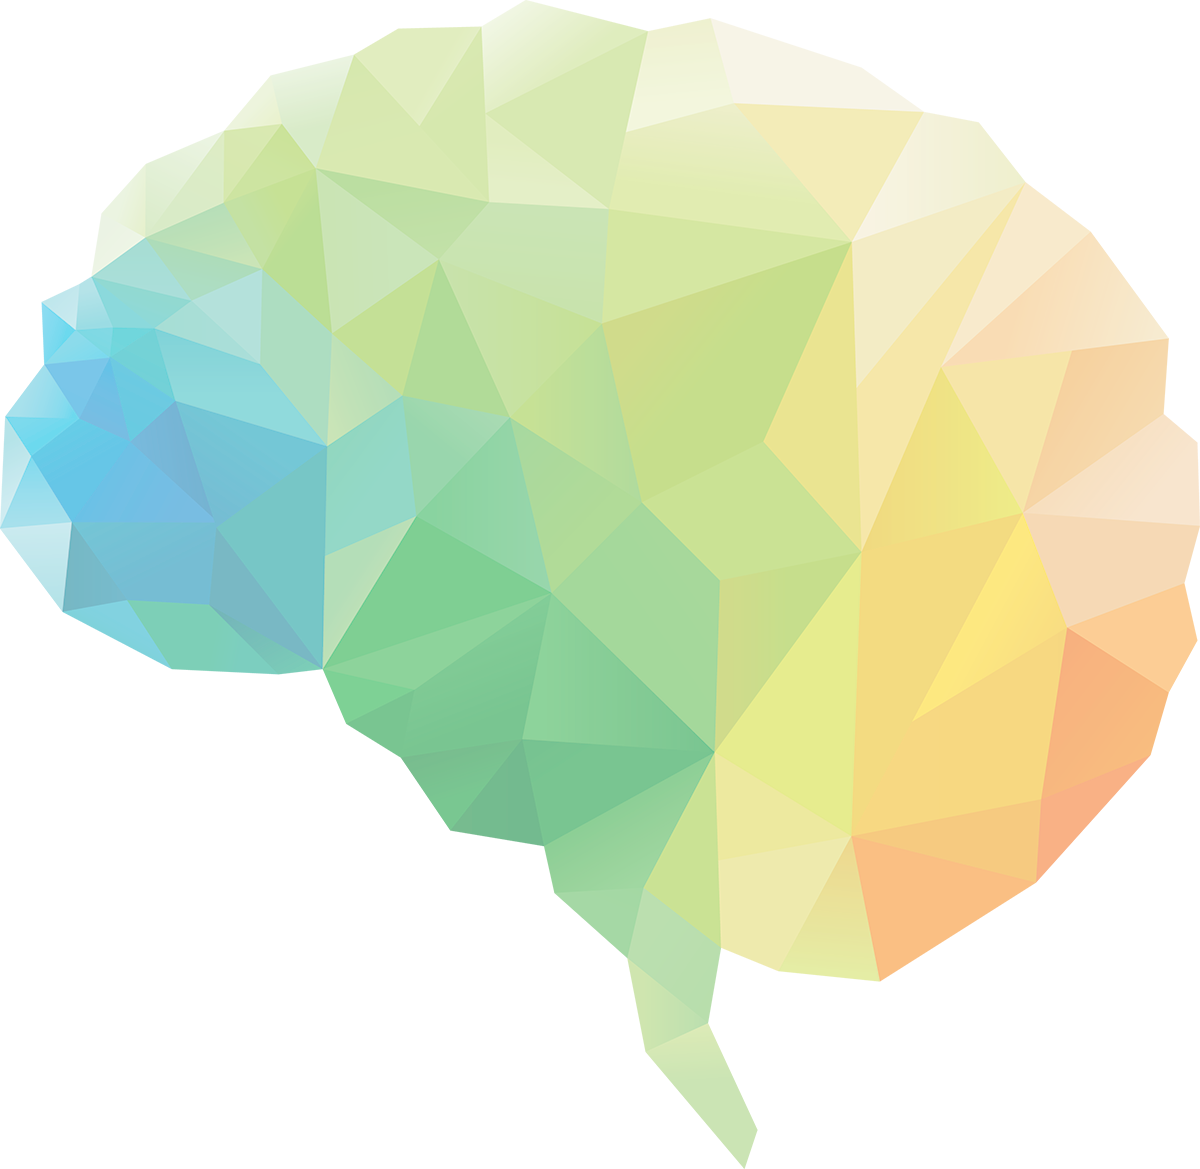 A Colorful Polygonal Brain